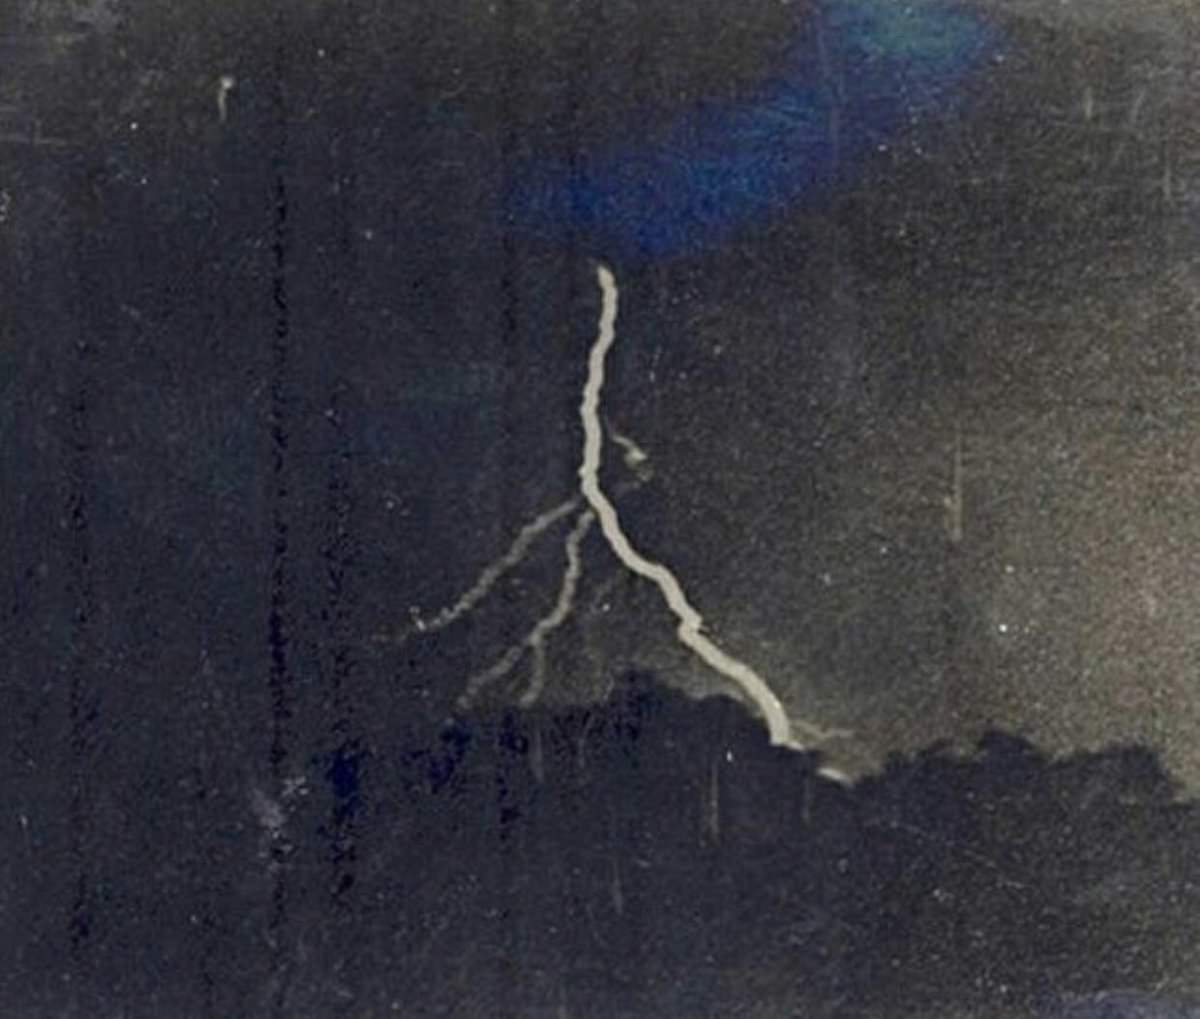 The First Lightning Photograph, 1882